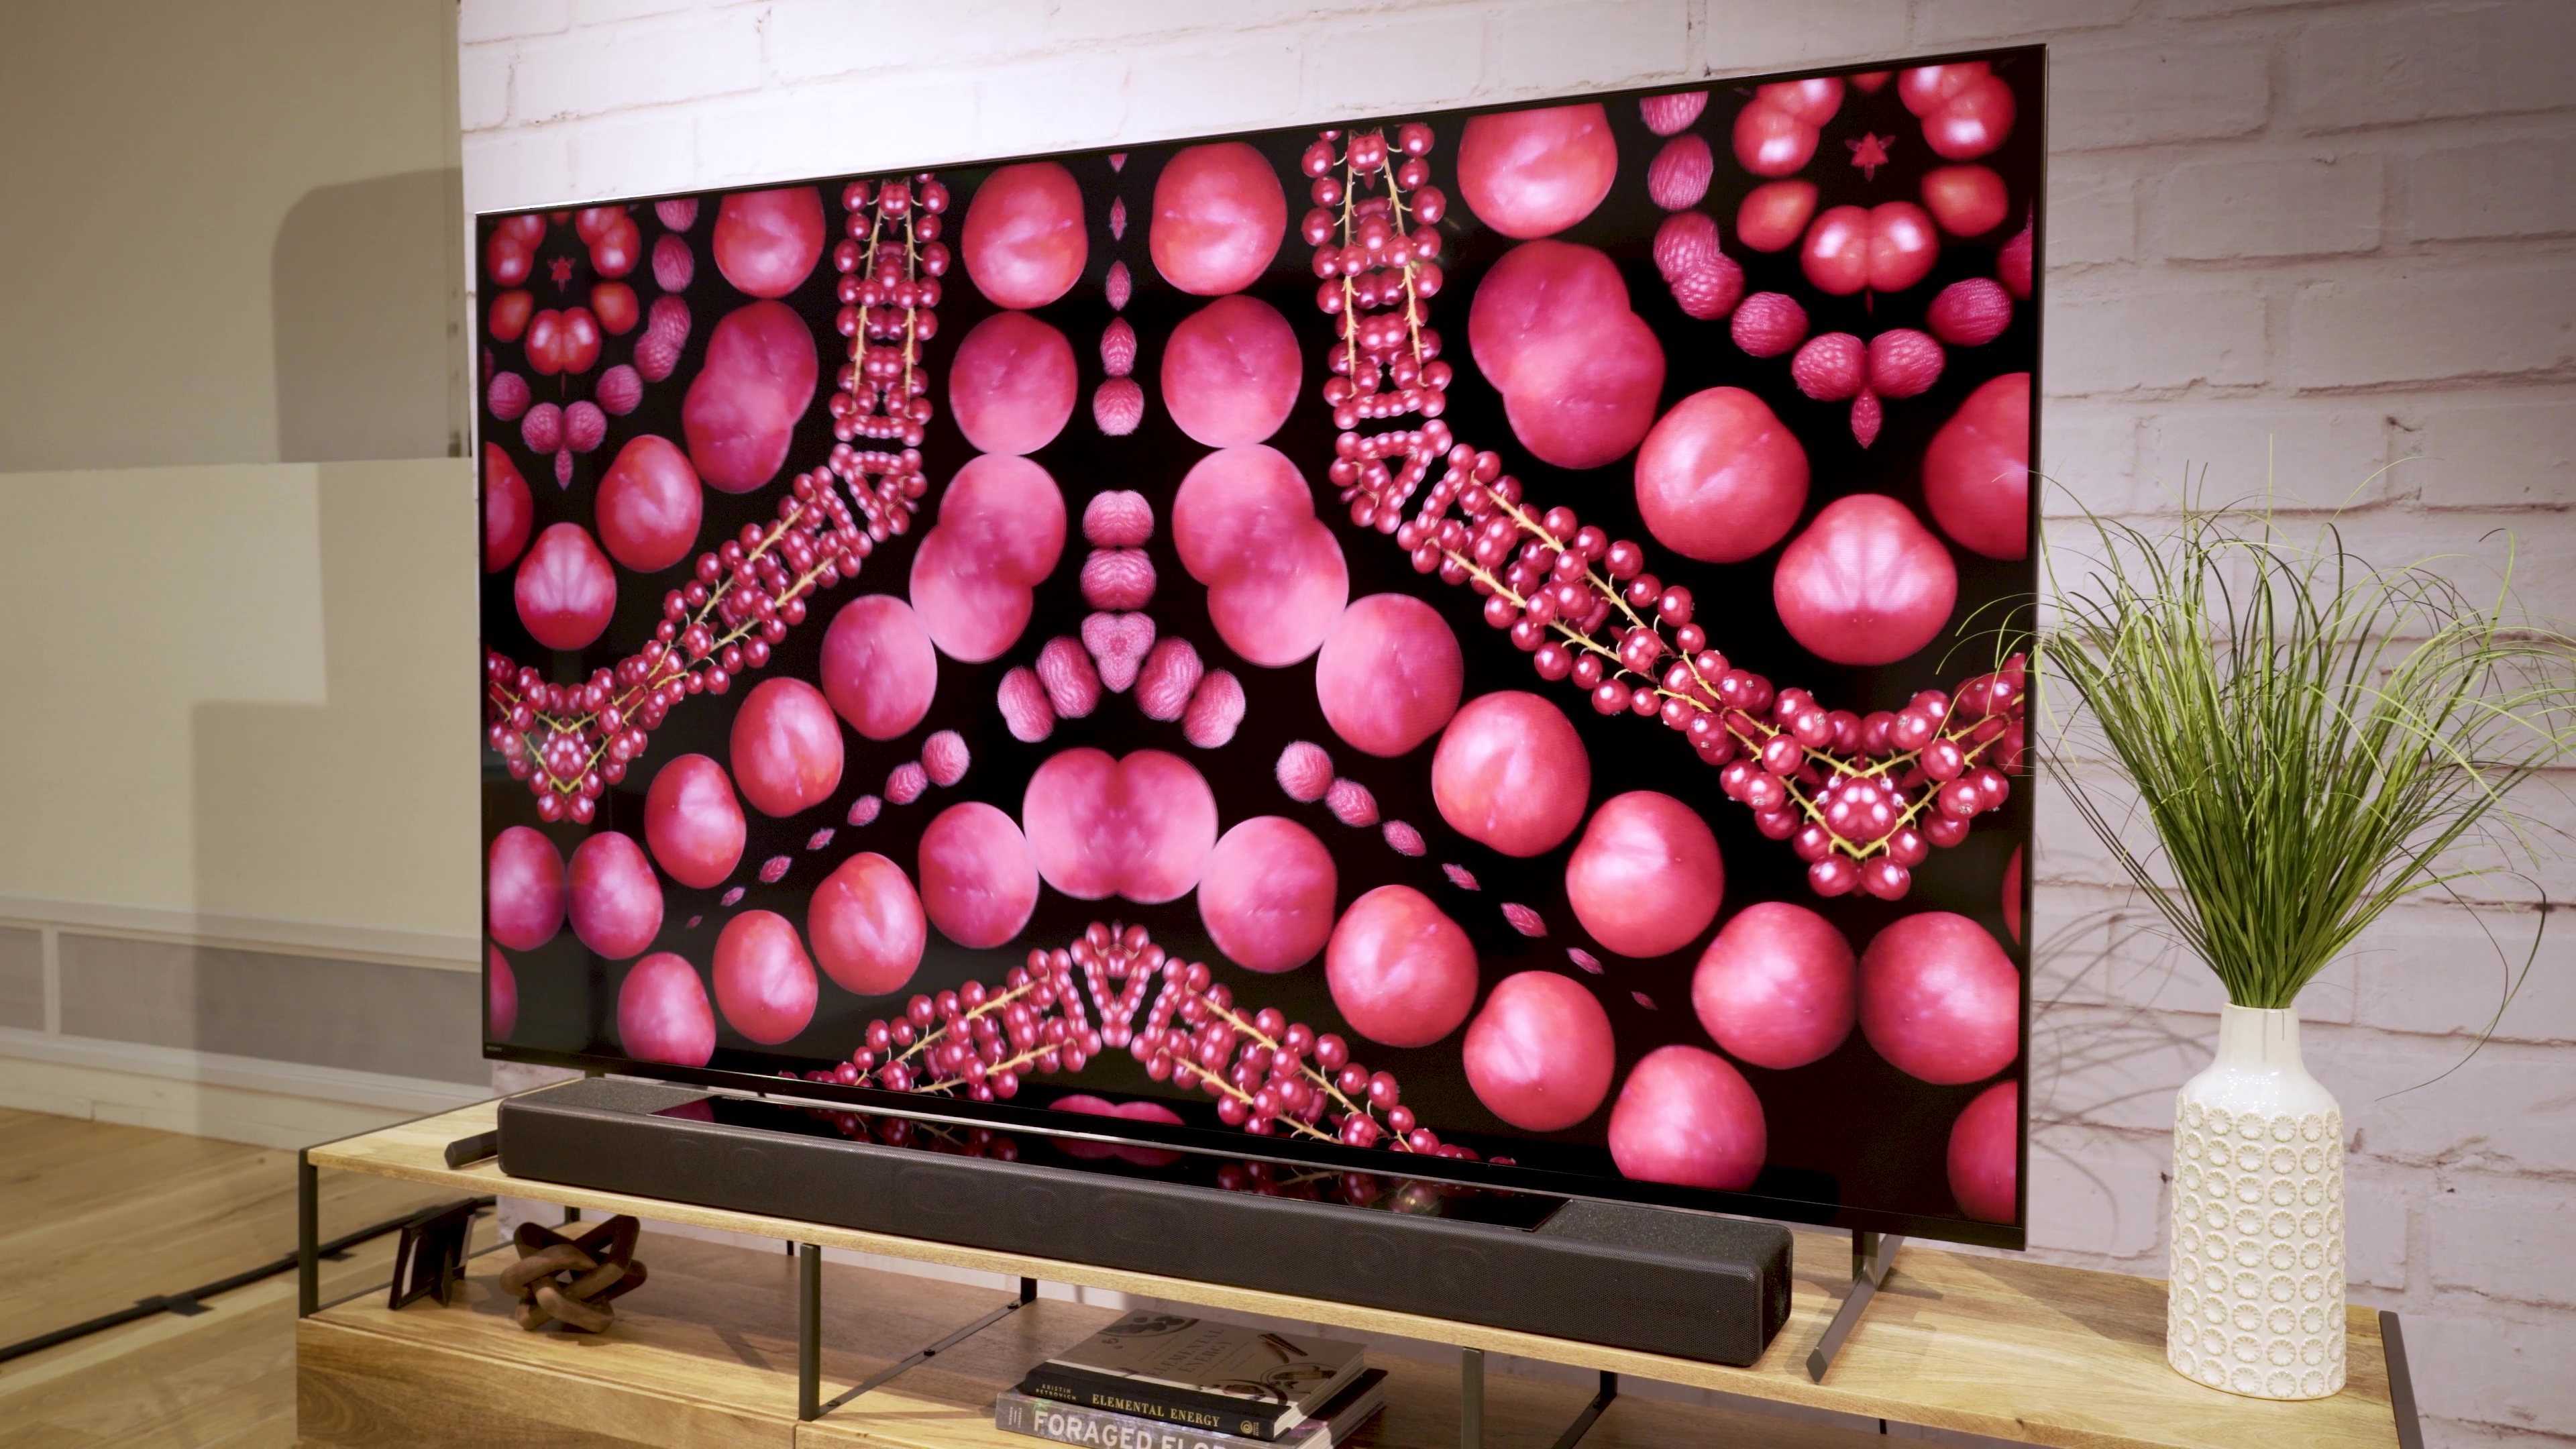 Sony TVs 2020: 8K TVs, OLED TVs and every 4K Sony TV